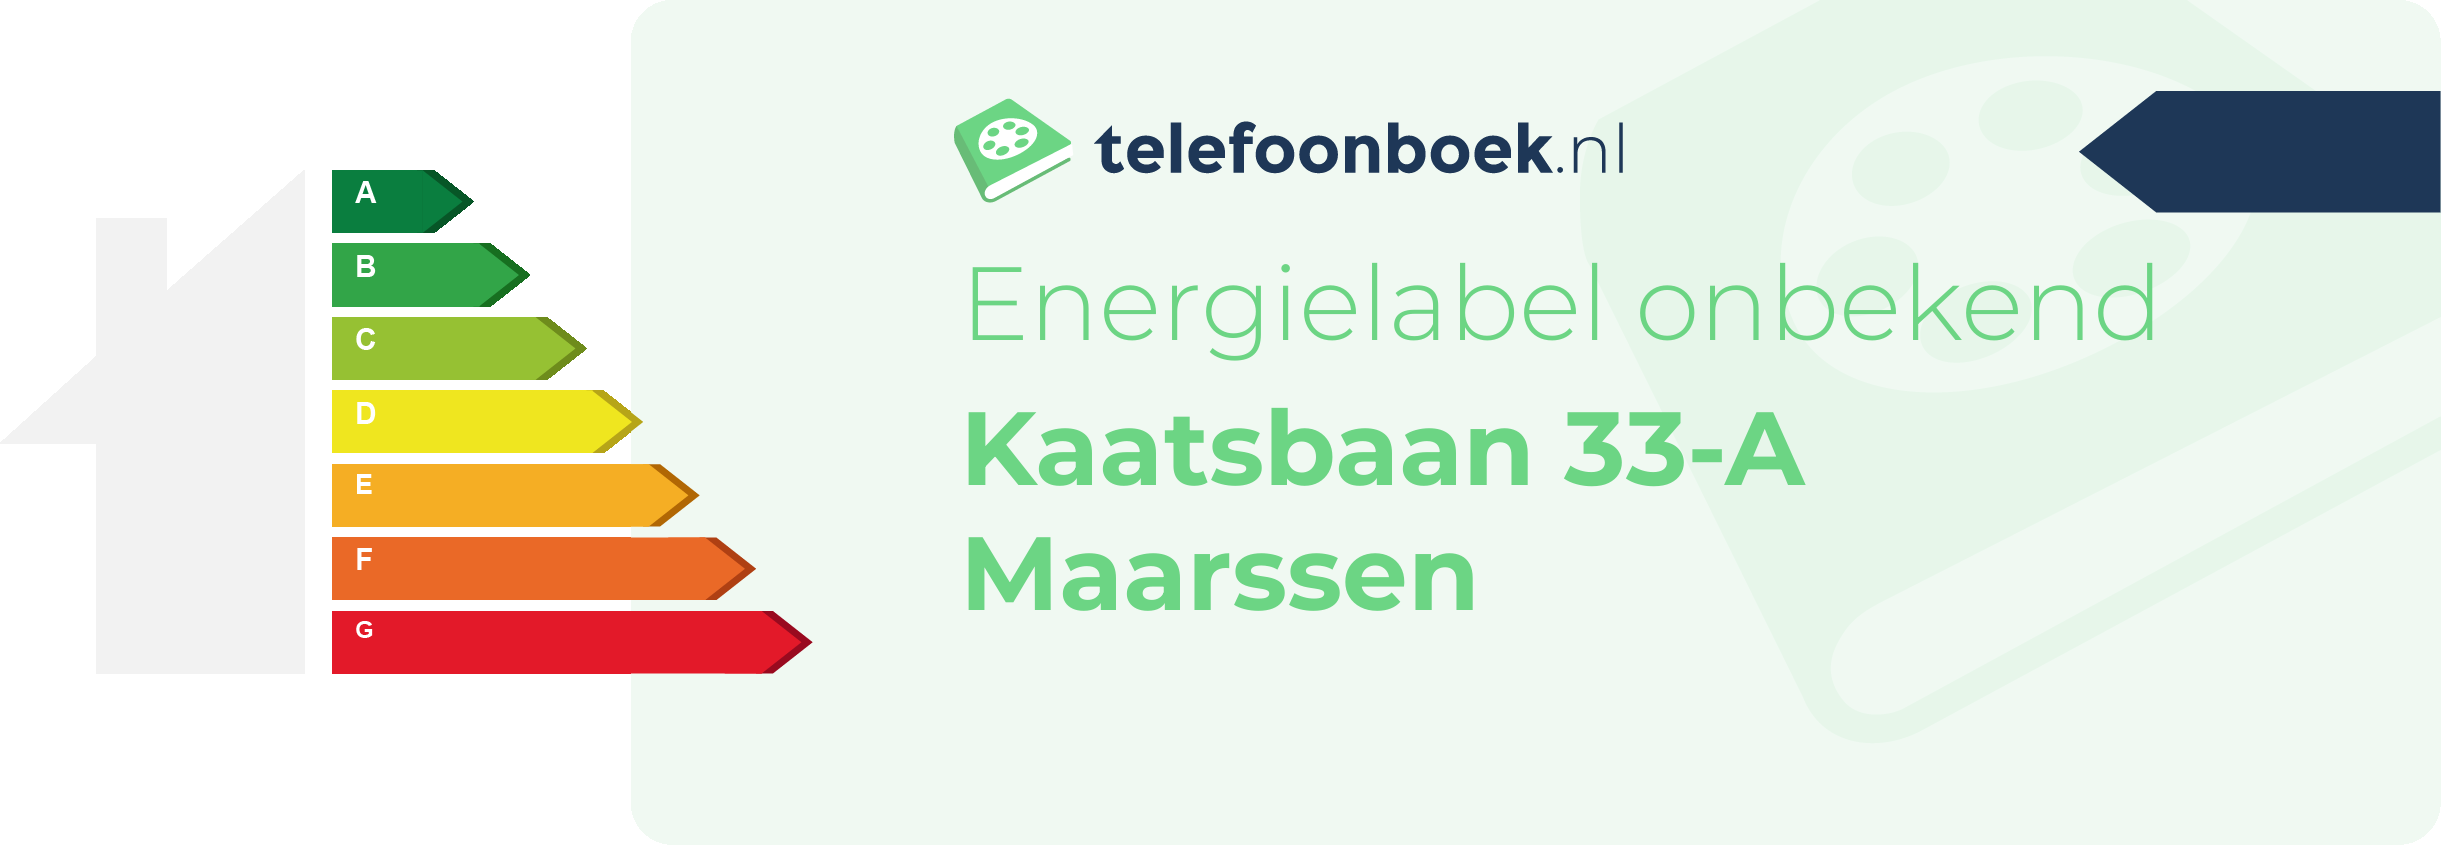 Energielabel Kaatsbaan 33-A Maarssen